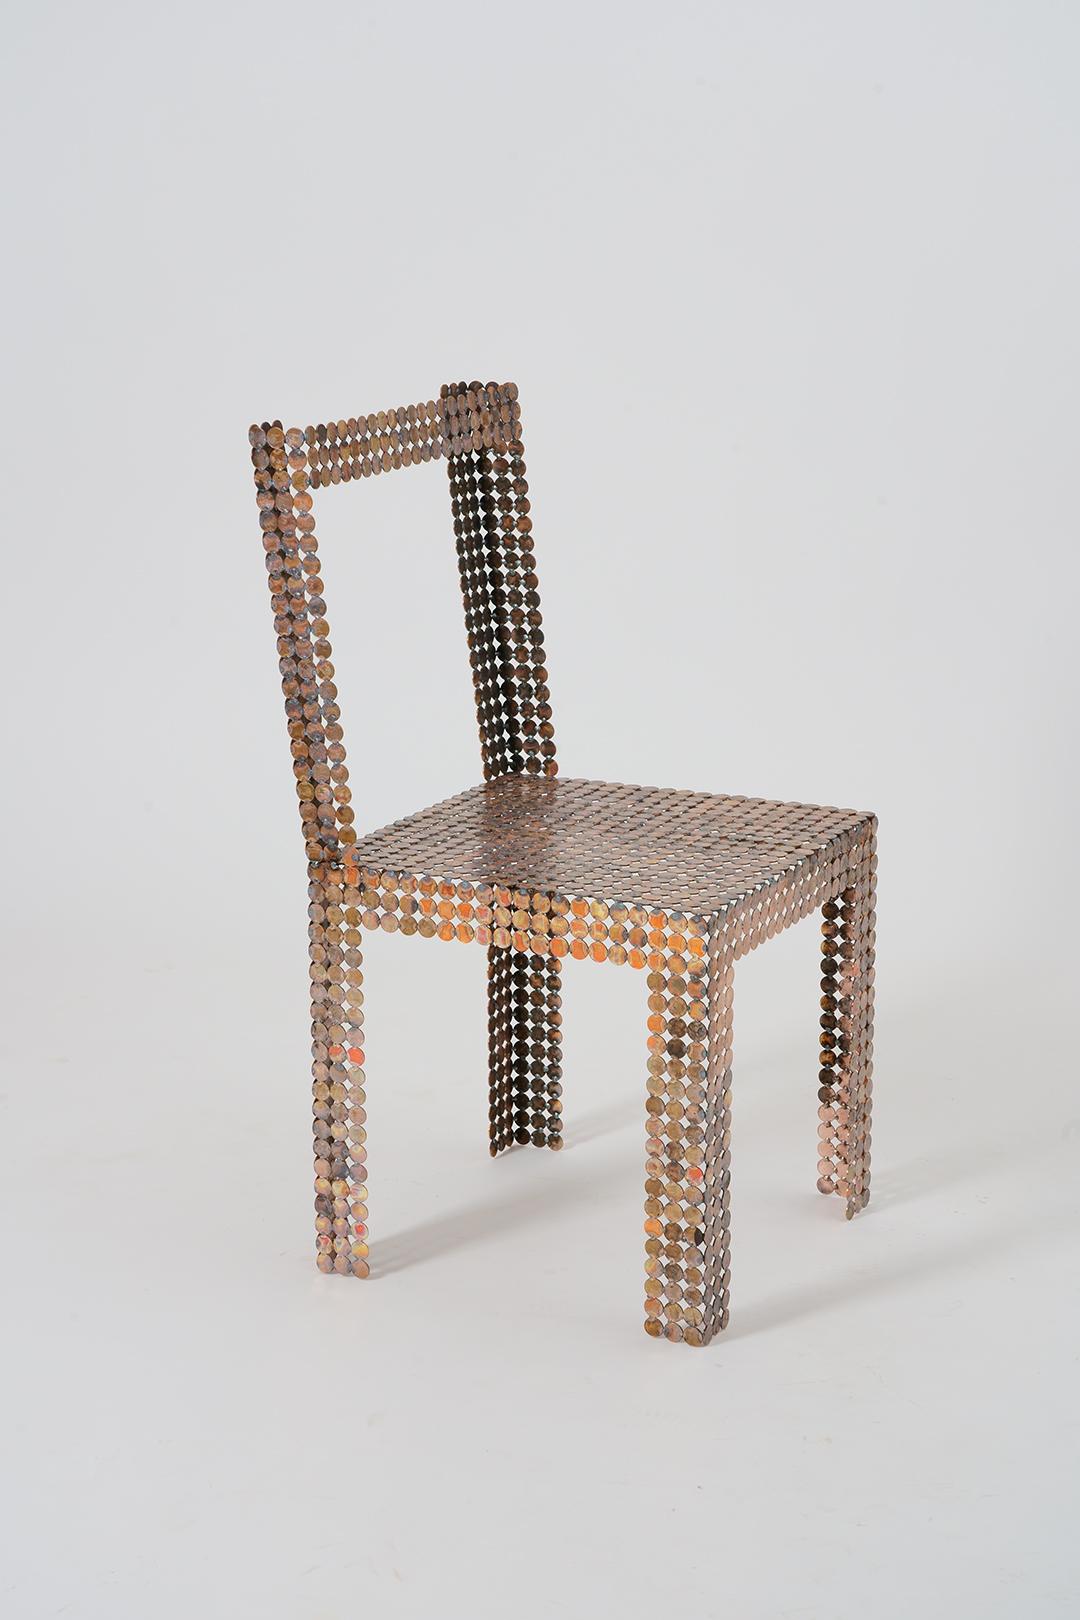 Spanish Calderilla Chair 5 Cent Coin Chair by Cristian Herrera Dalmau For Sale